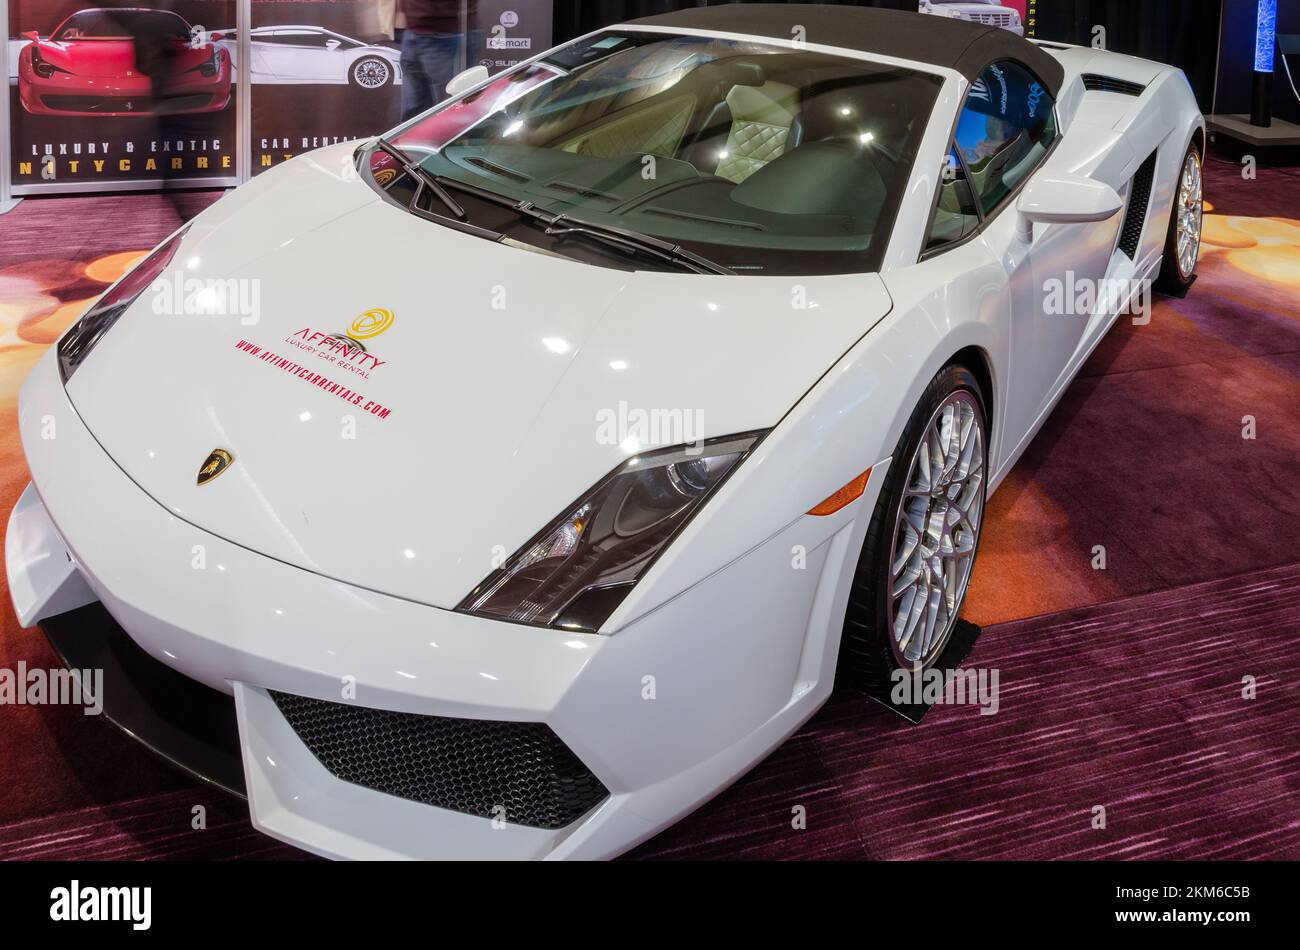 Lamborghini Auto von Affinity Car Rental Stockfoto